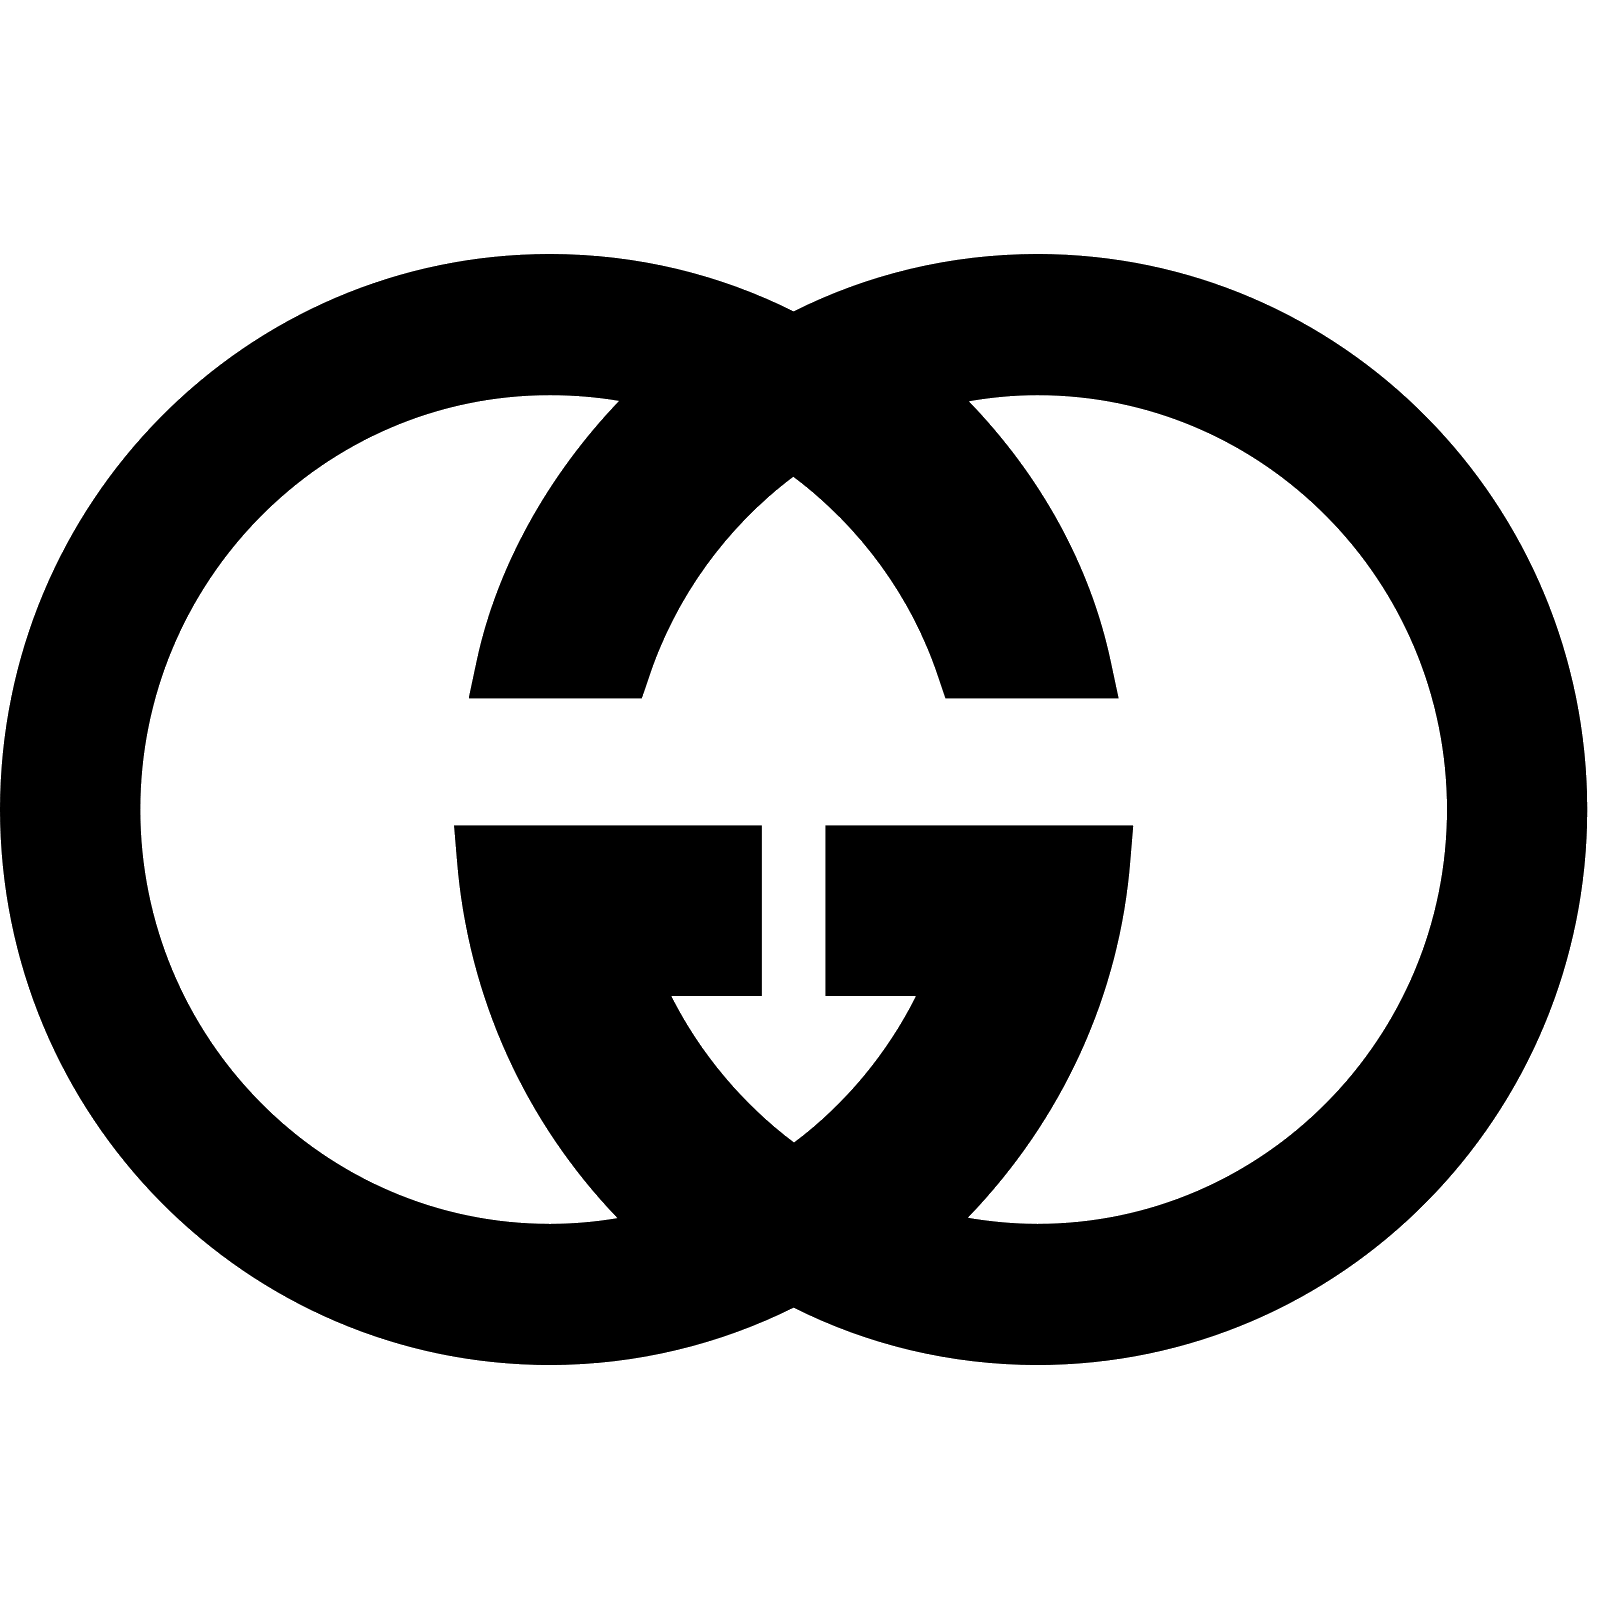 vector gucci logo